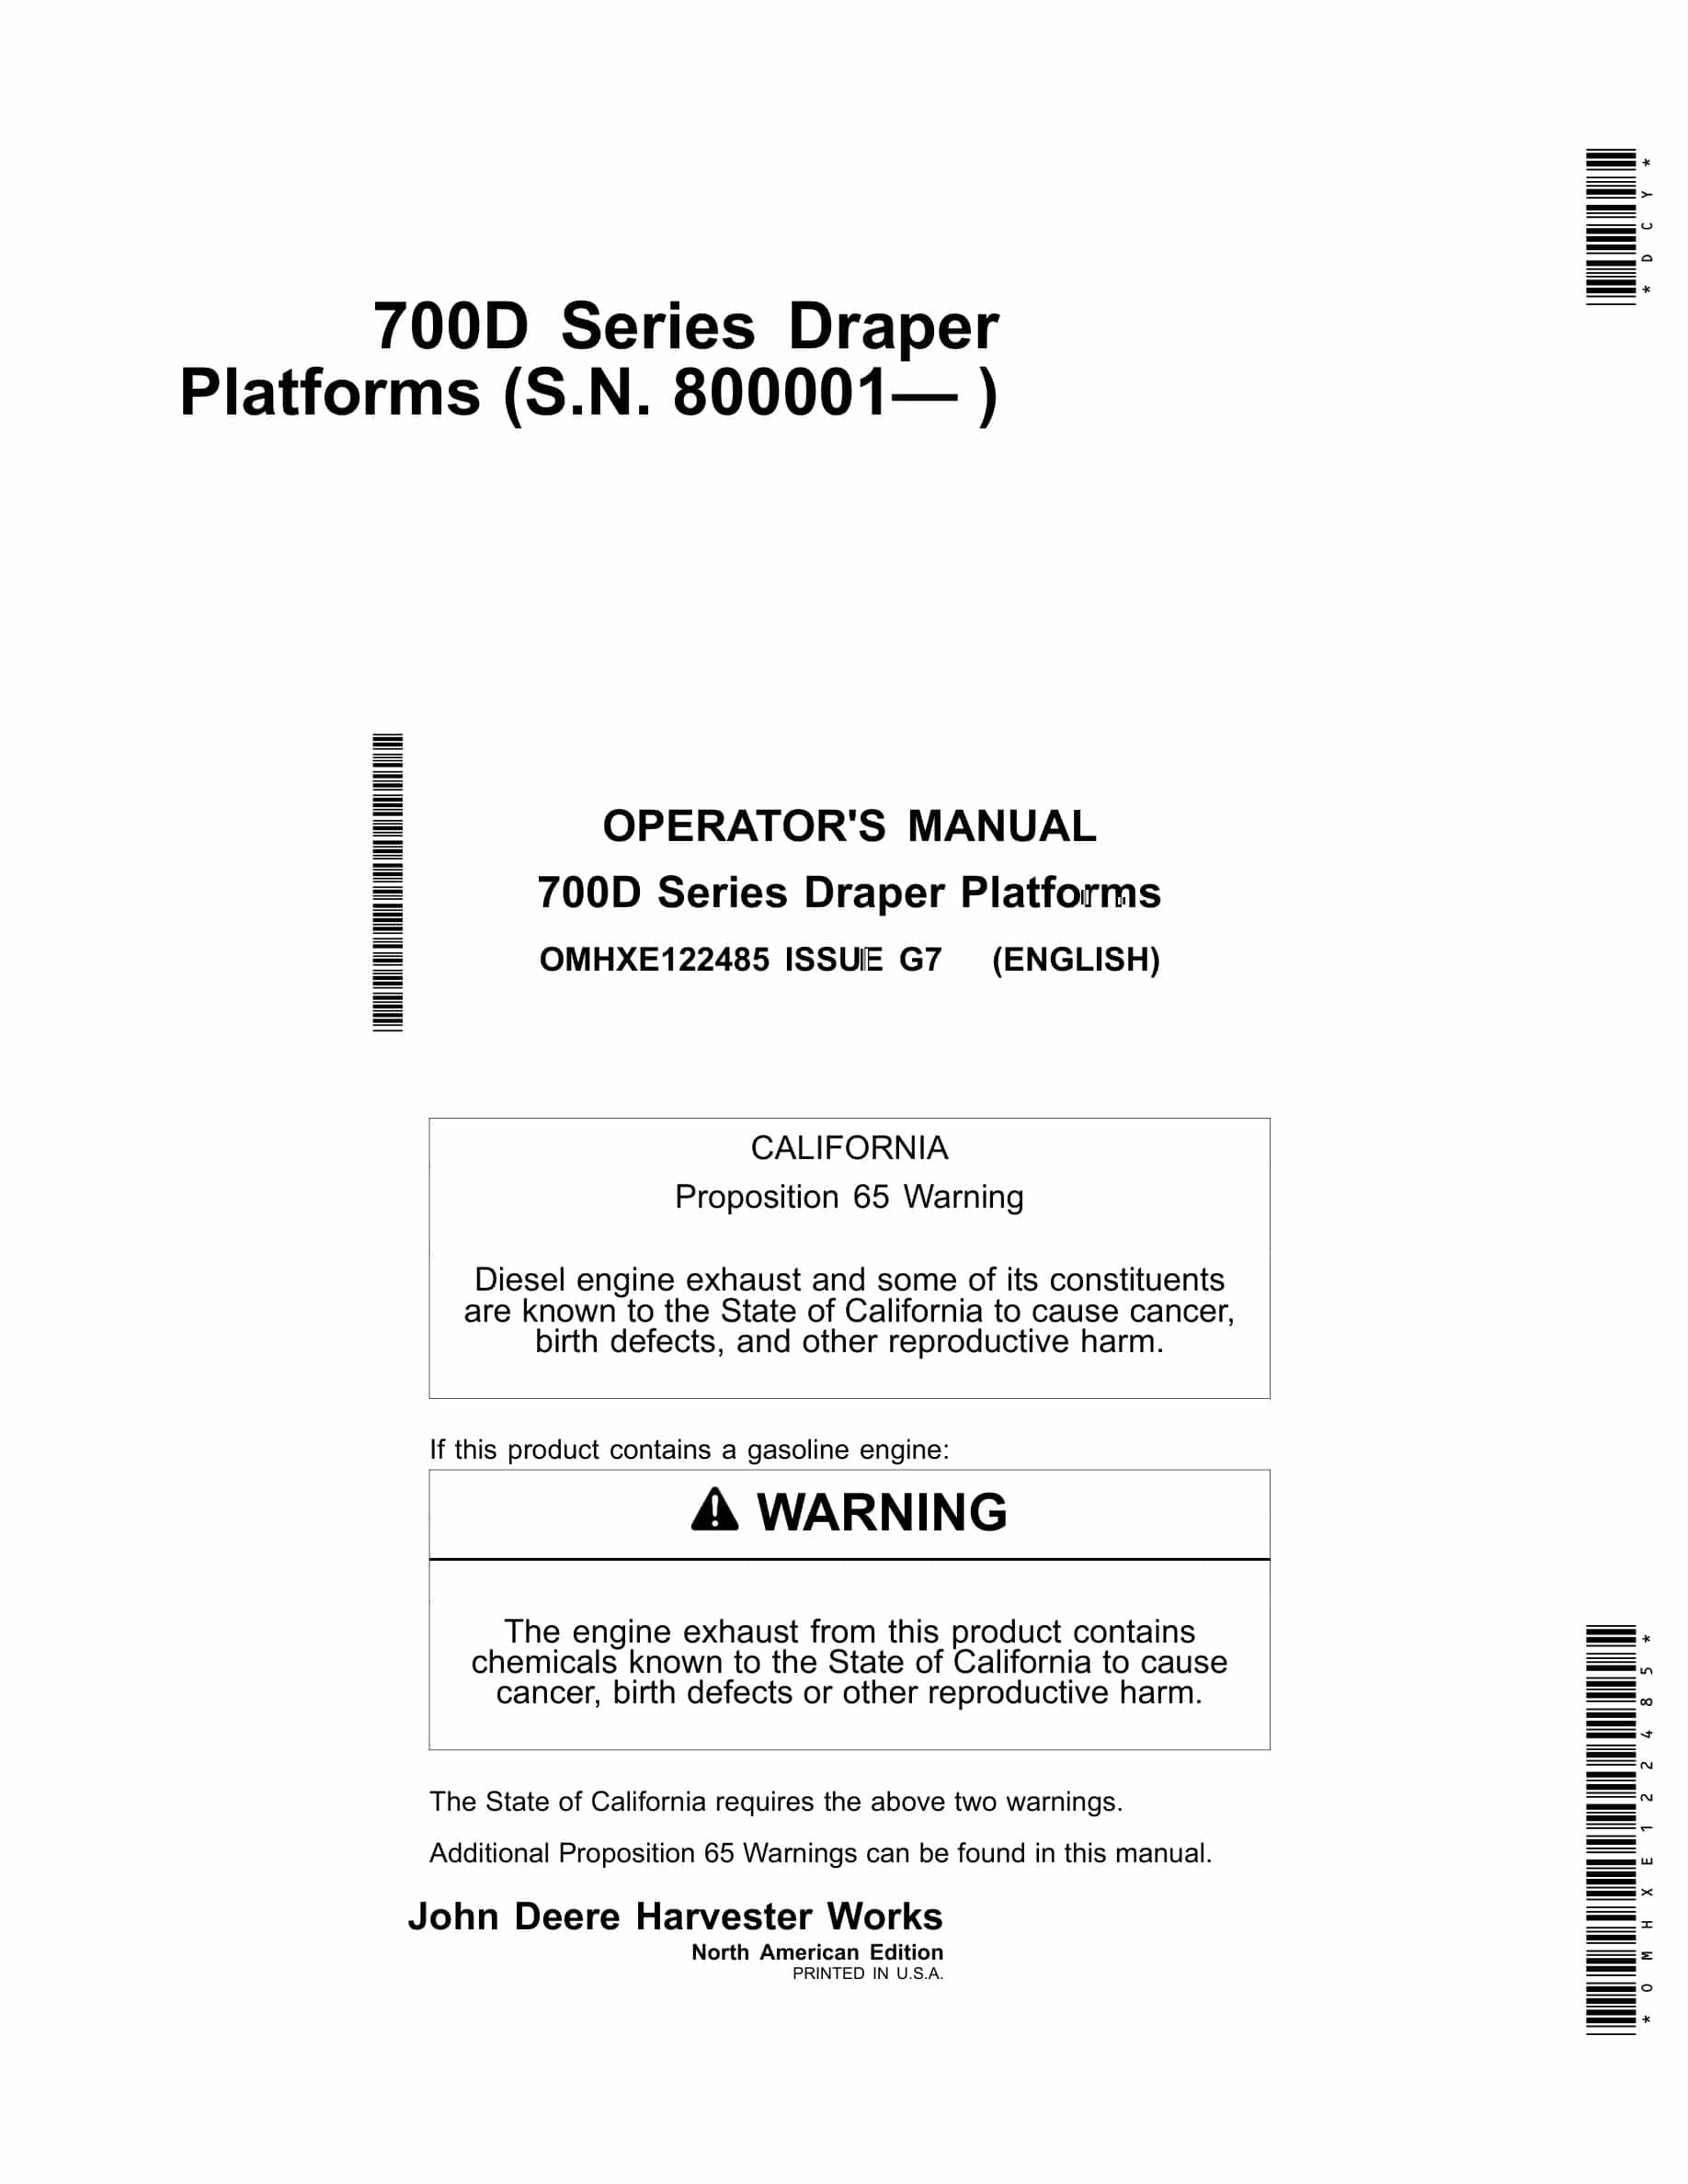 John Deere 700D Series Draper Platforms Operator Manual OMHXE122485-1